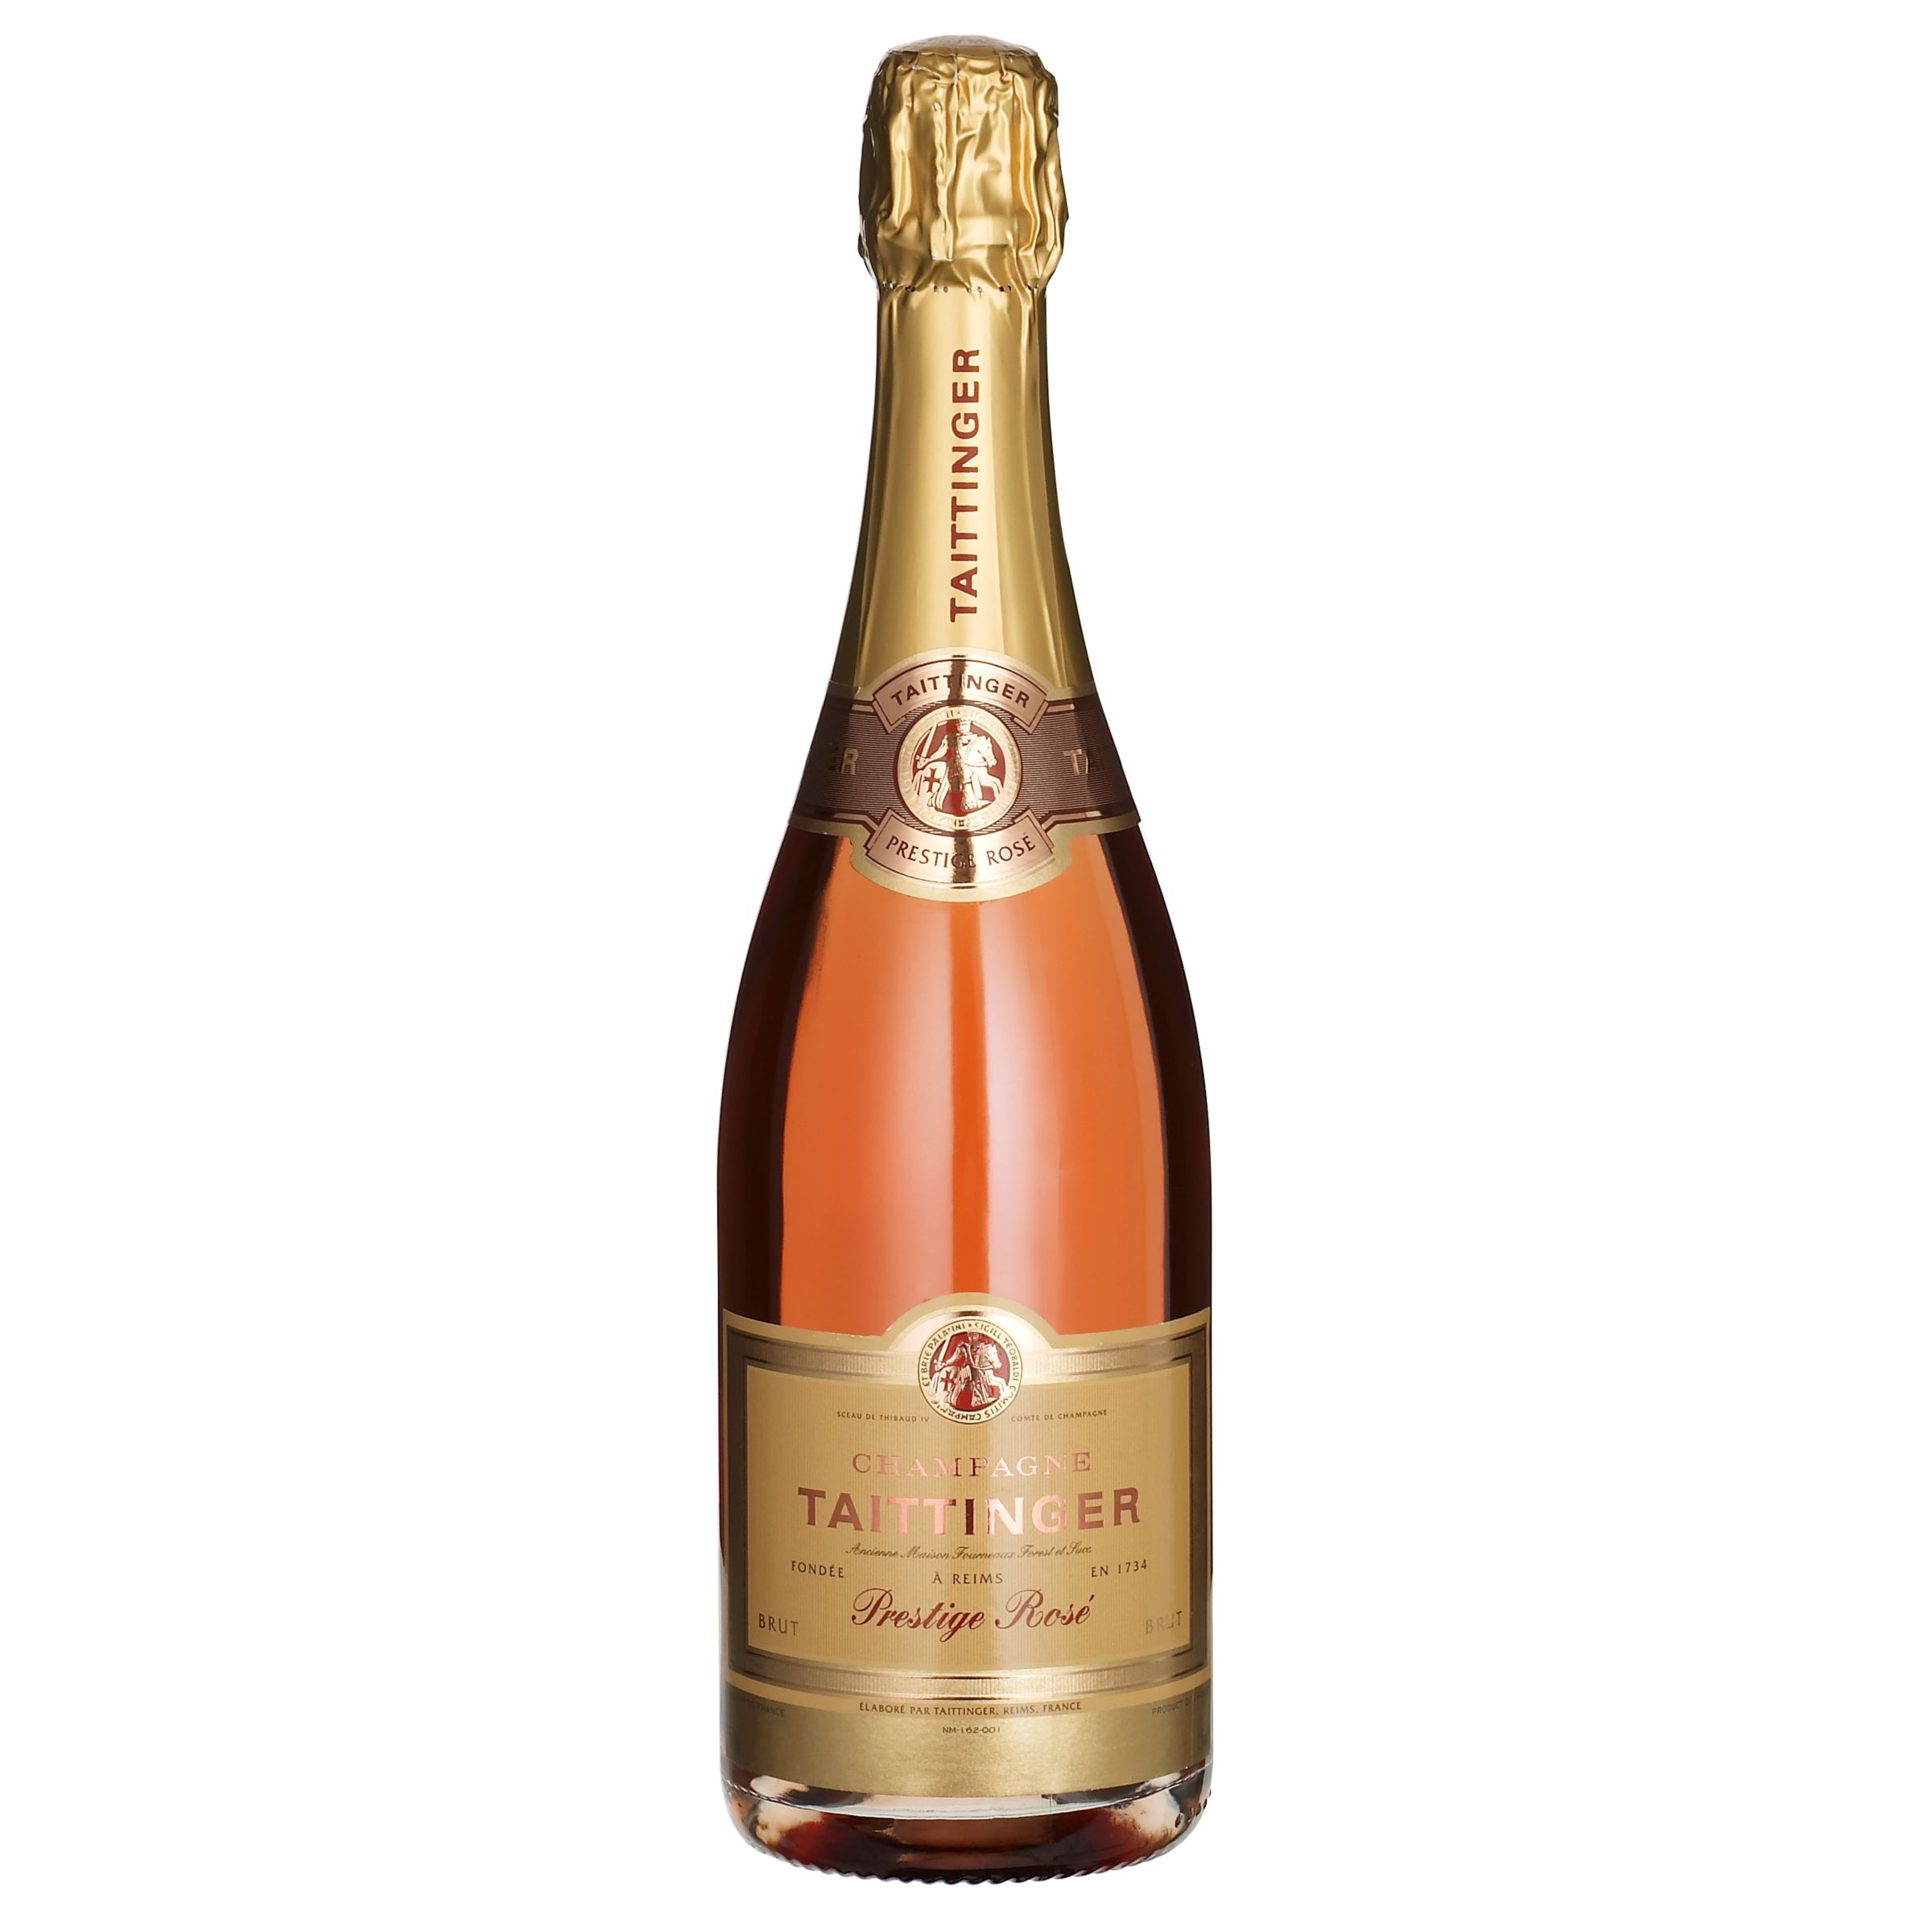 Taittinger Prestige Rosé NV Champagne, France at JohnLewis